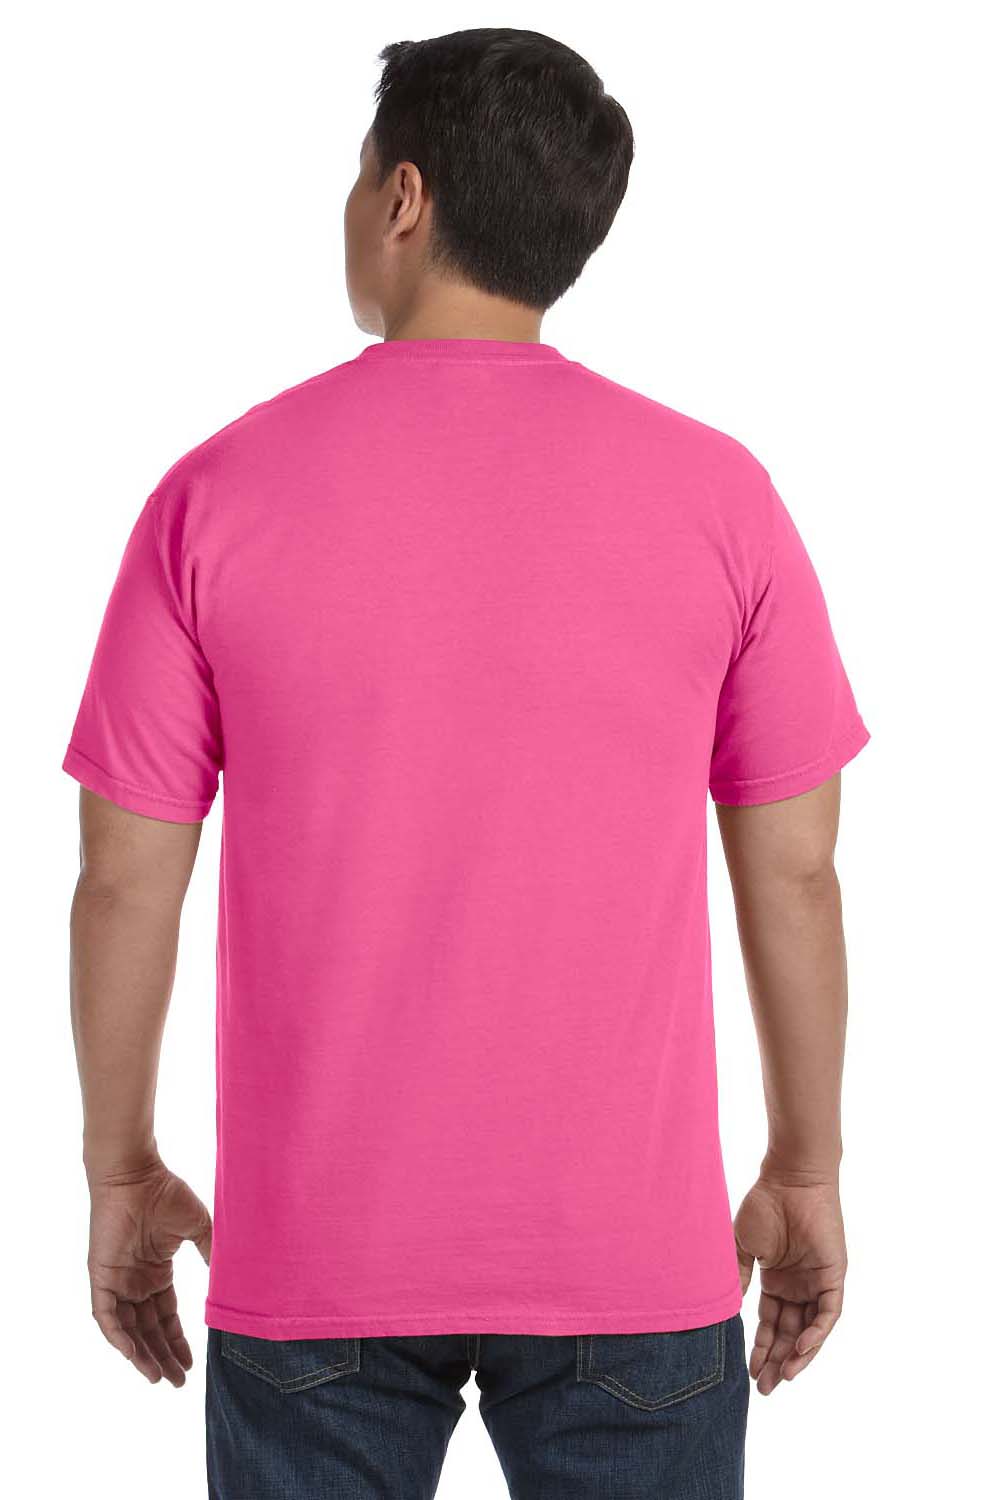 Comfort Colors C1717 Mens Short Sleeve Crewneck T-Shirt Neon Pink Back